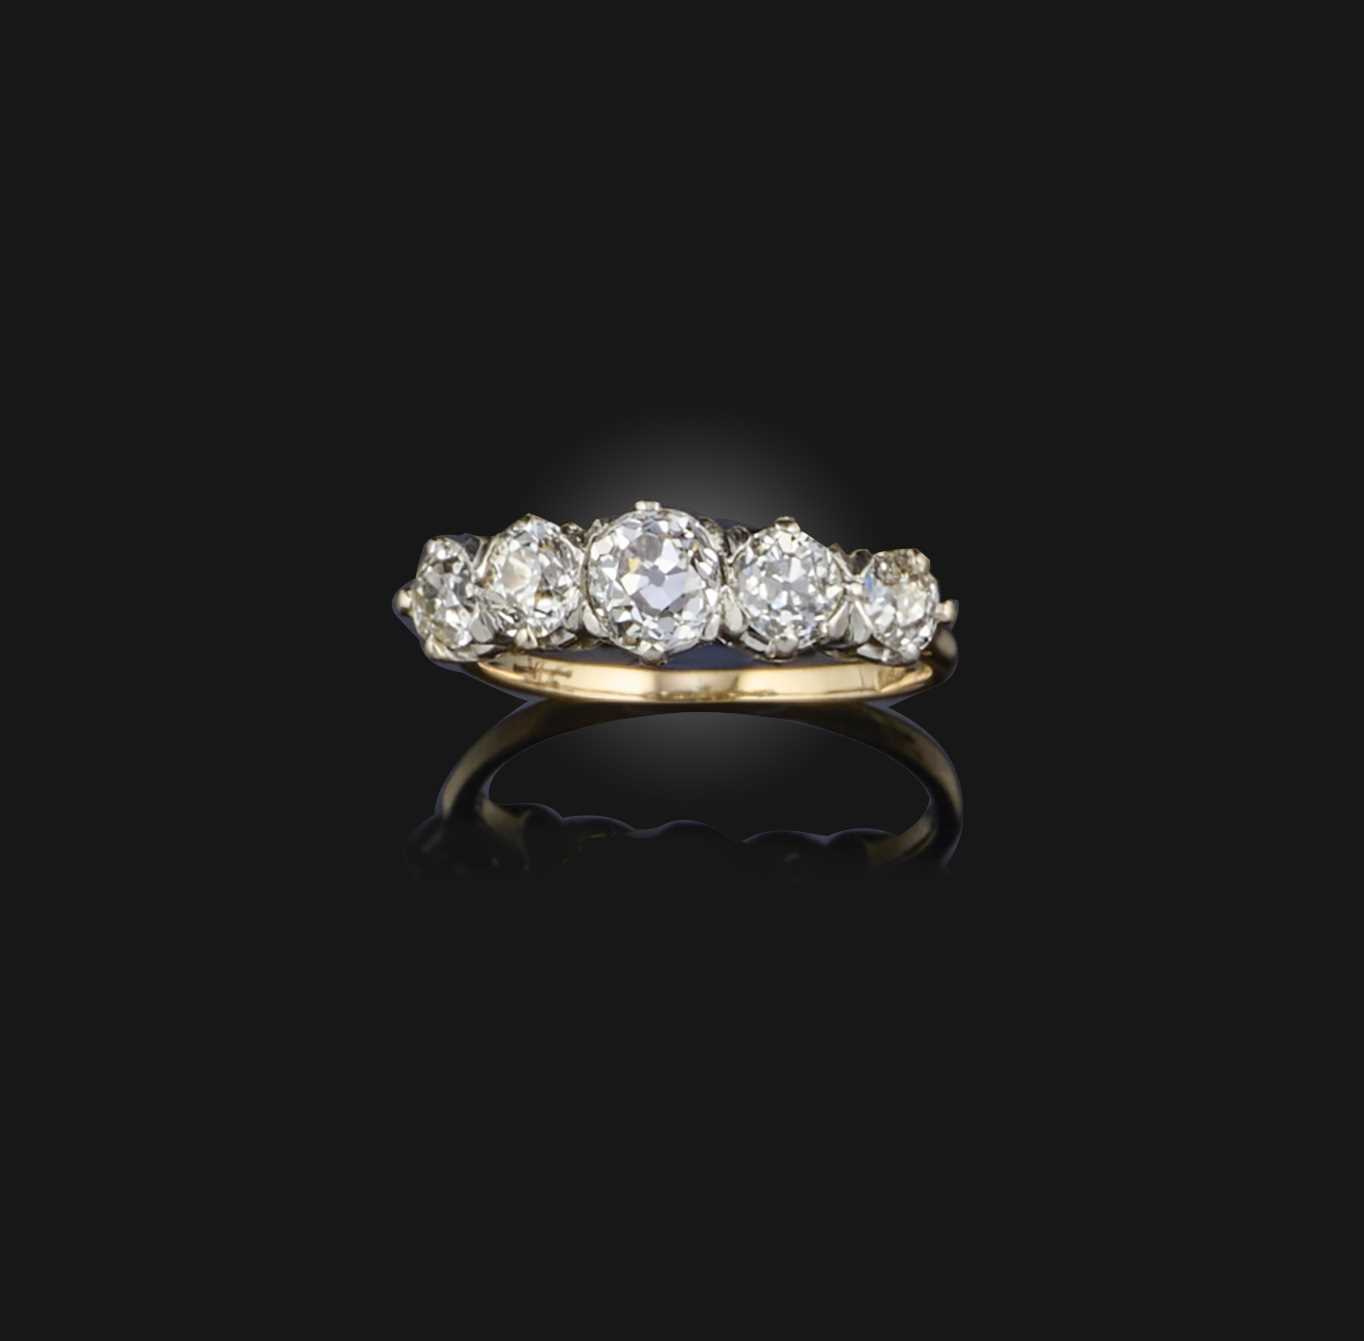 A five-stone diamond ring, designed as a line of graduated circular-cut diamonds totalling